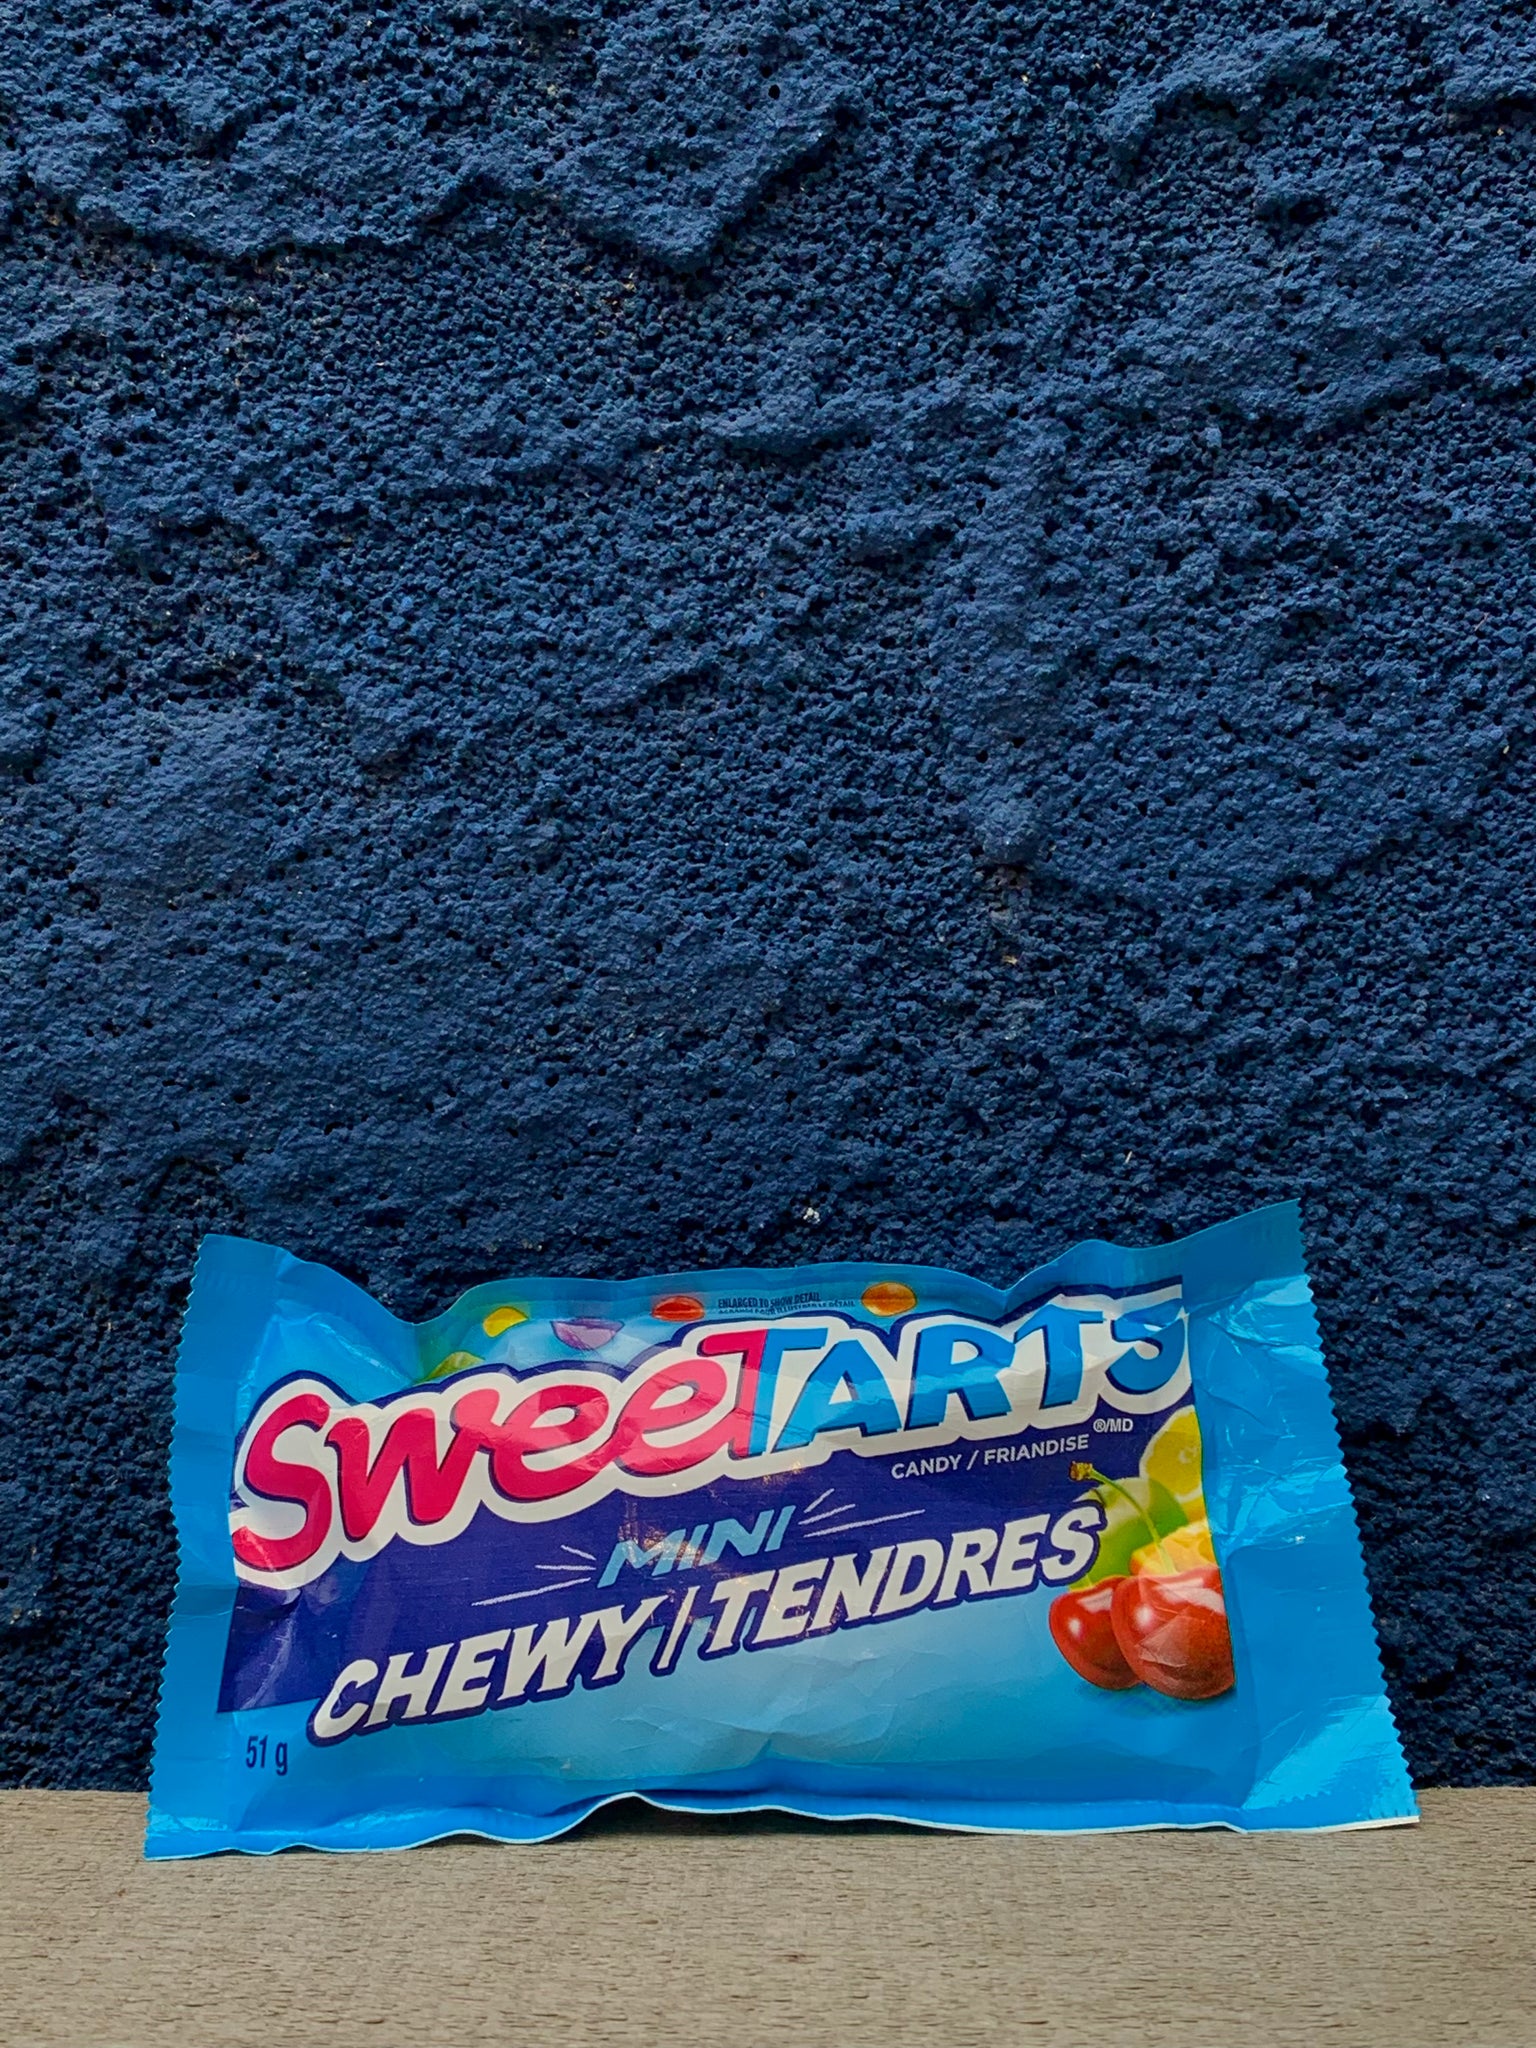 SweeTarts Mini Chewy